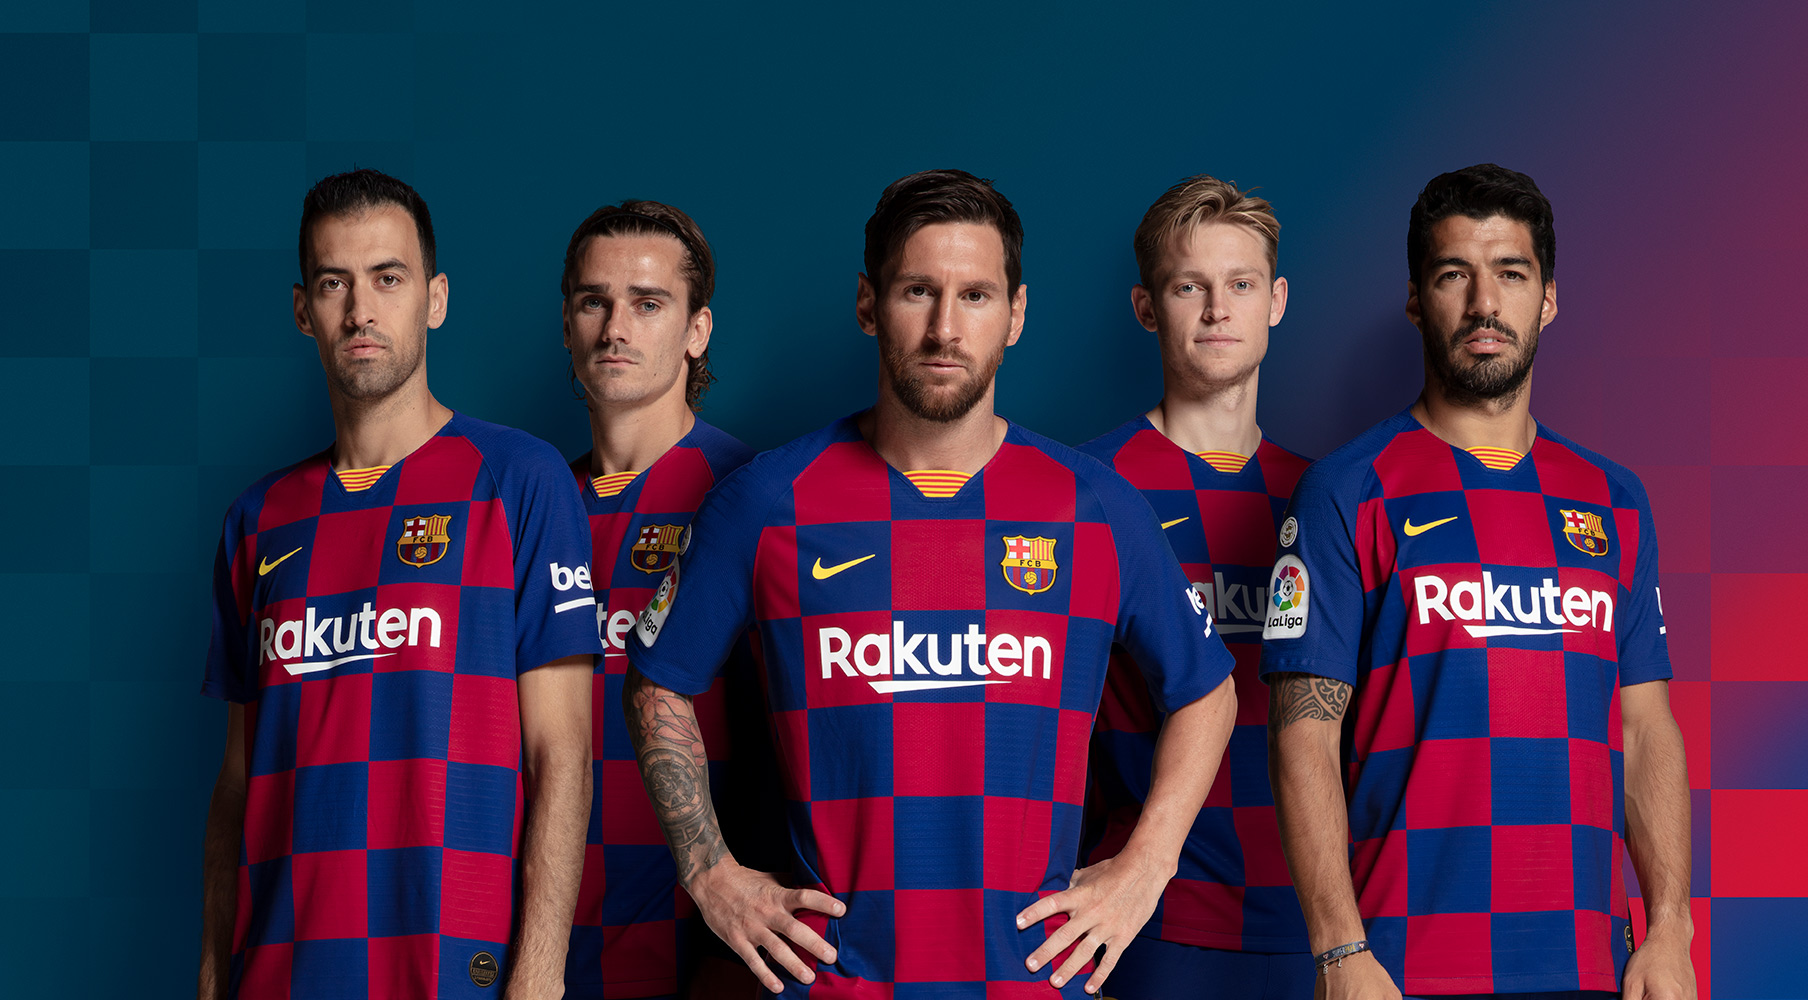 CUPRA and FC Barcelona global alliance players